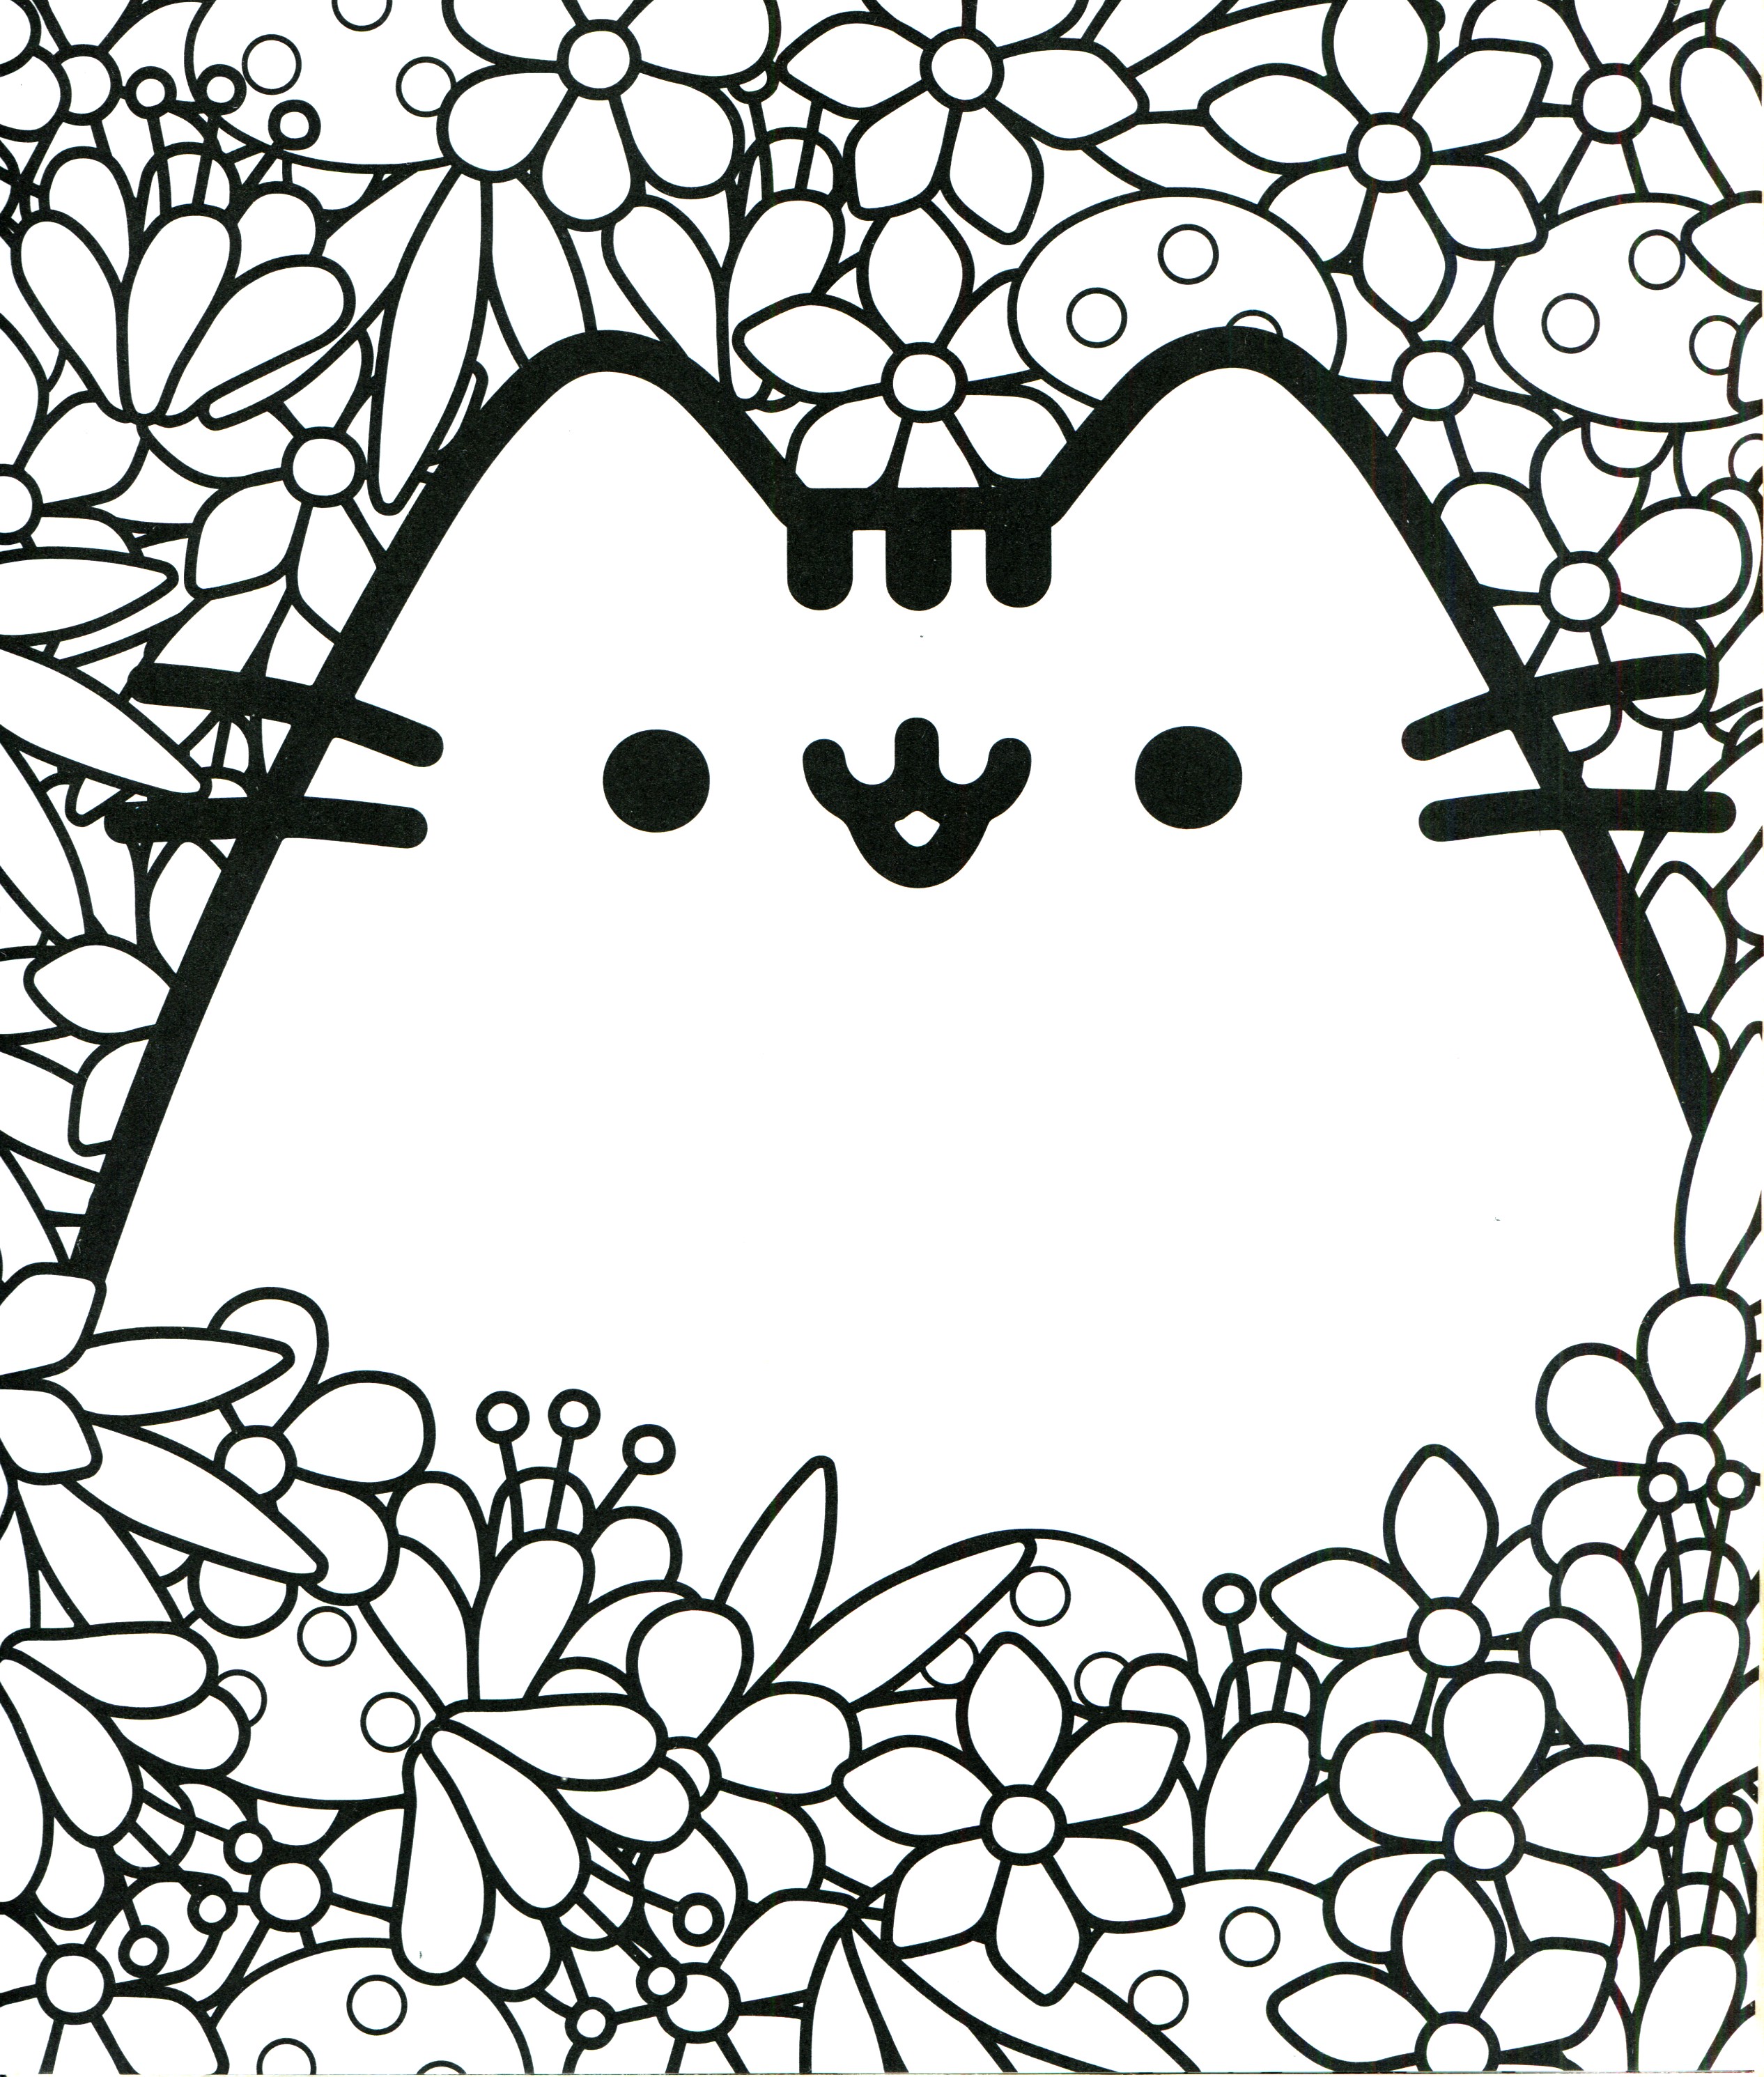 Pusheen Grumpy Cat sur Booktsukihenshin Nyan de Pusheen